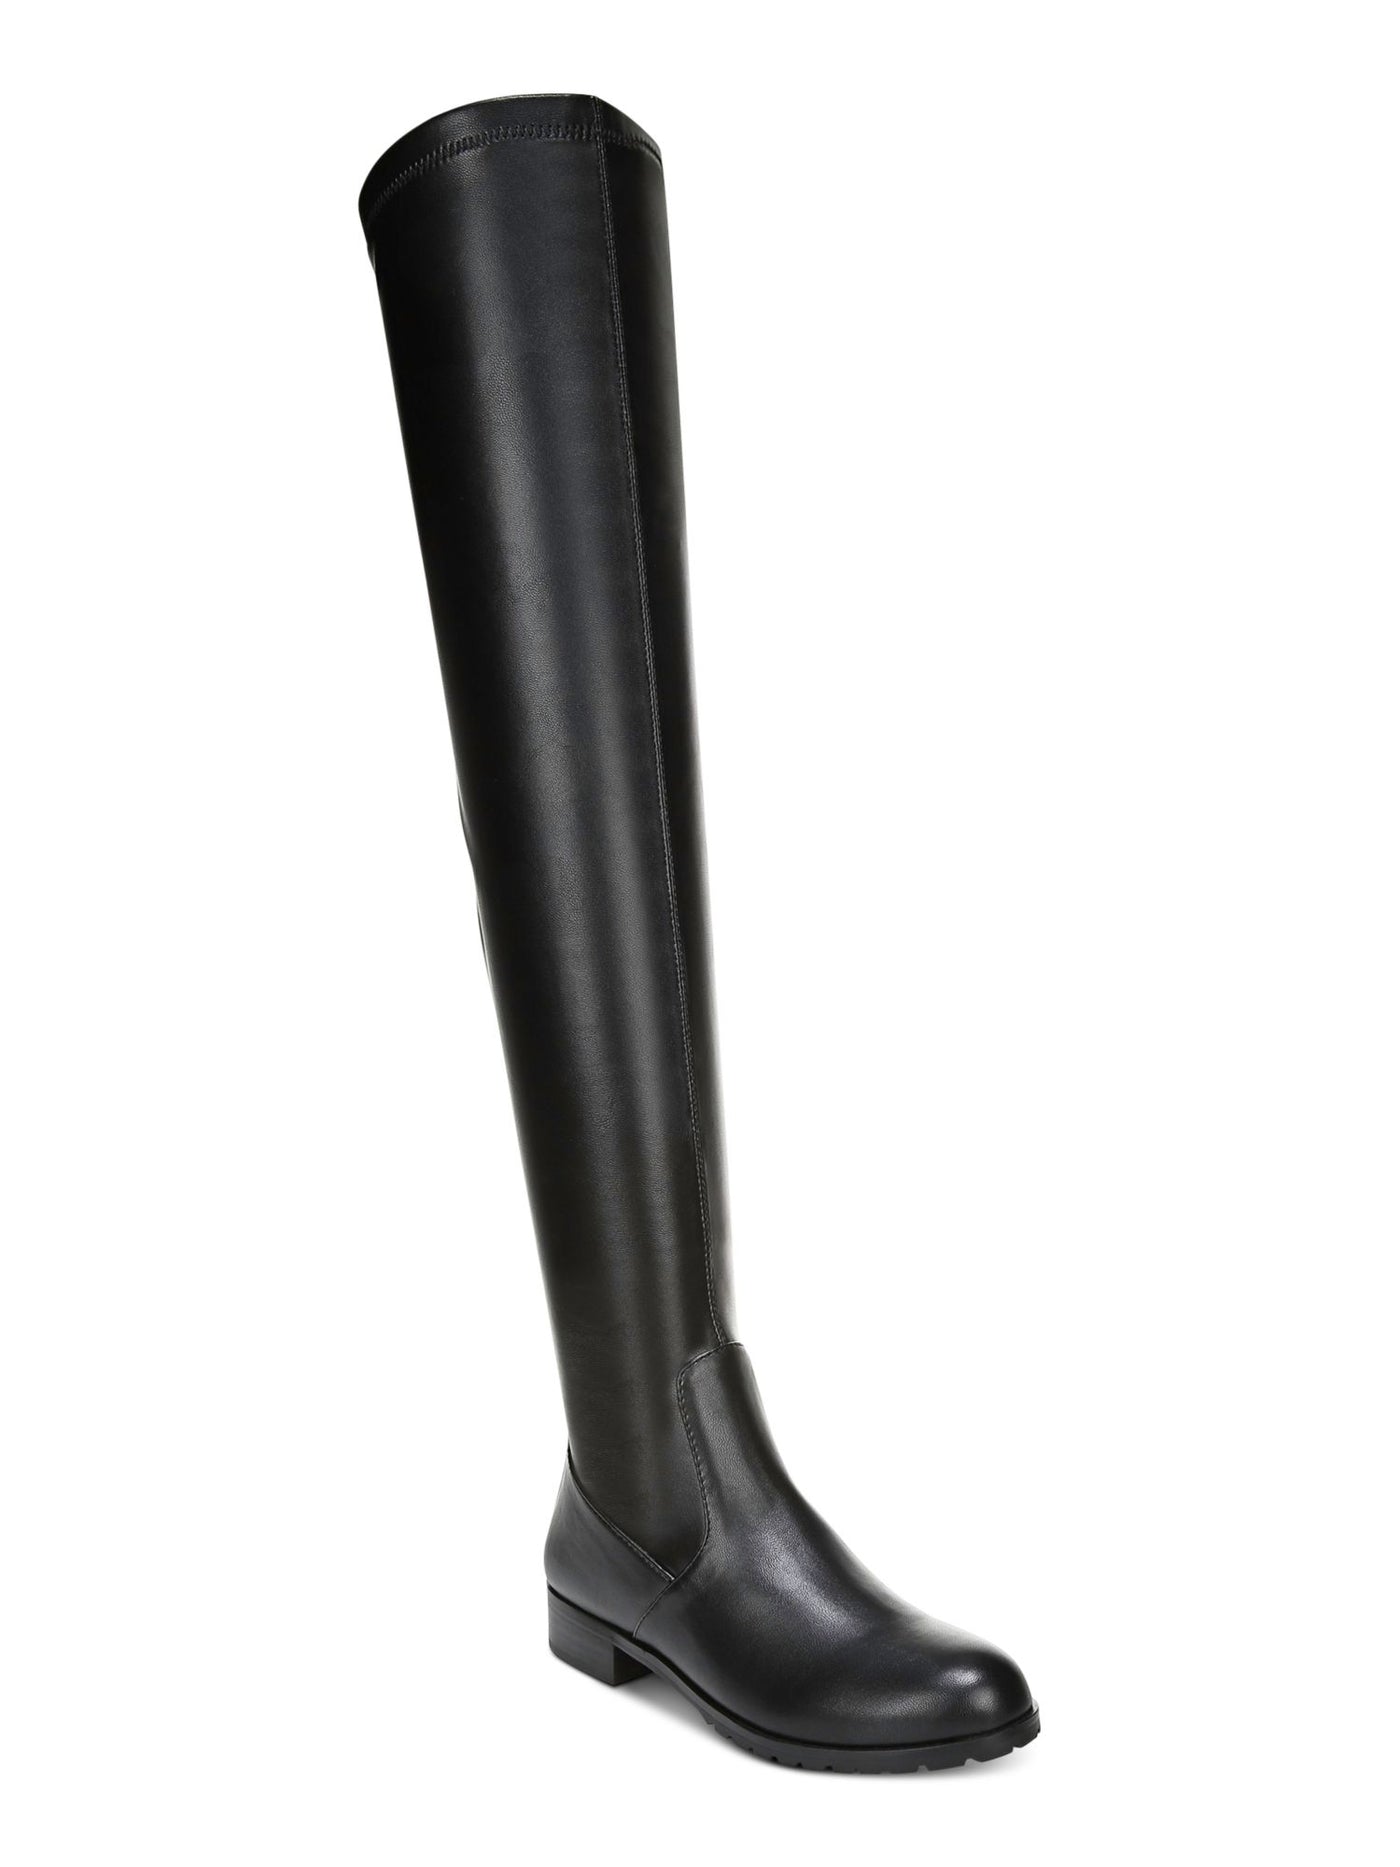 BAR III Womens Black Studded Cushioned Lug Sole Taimi Round Toe Block Heel Zip-Up Boots Shoes 7.5 M